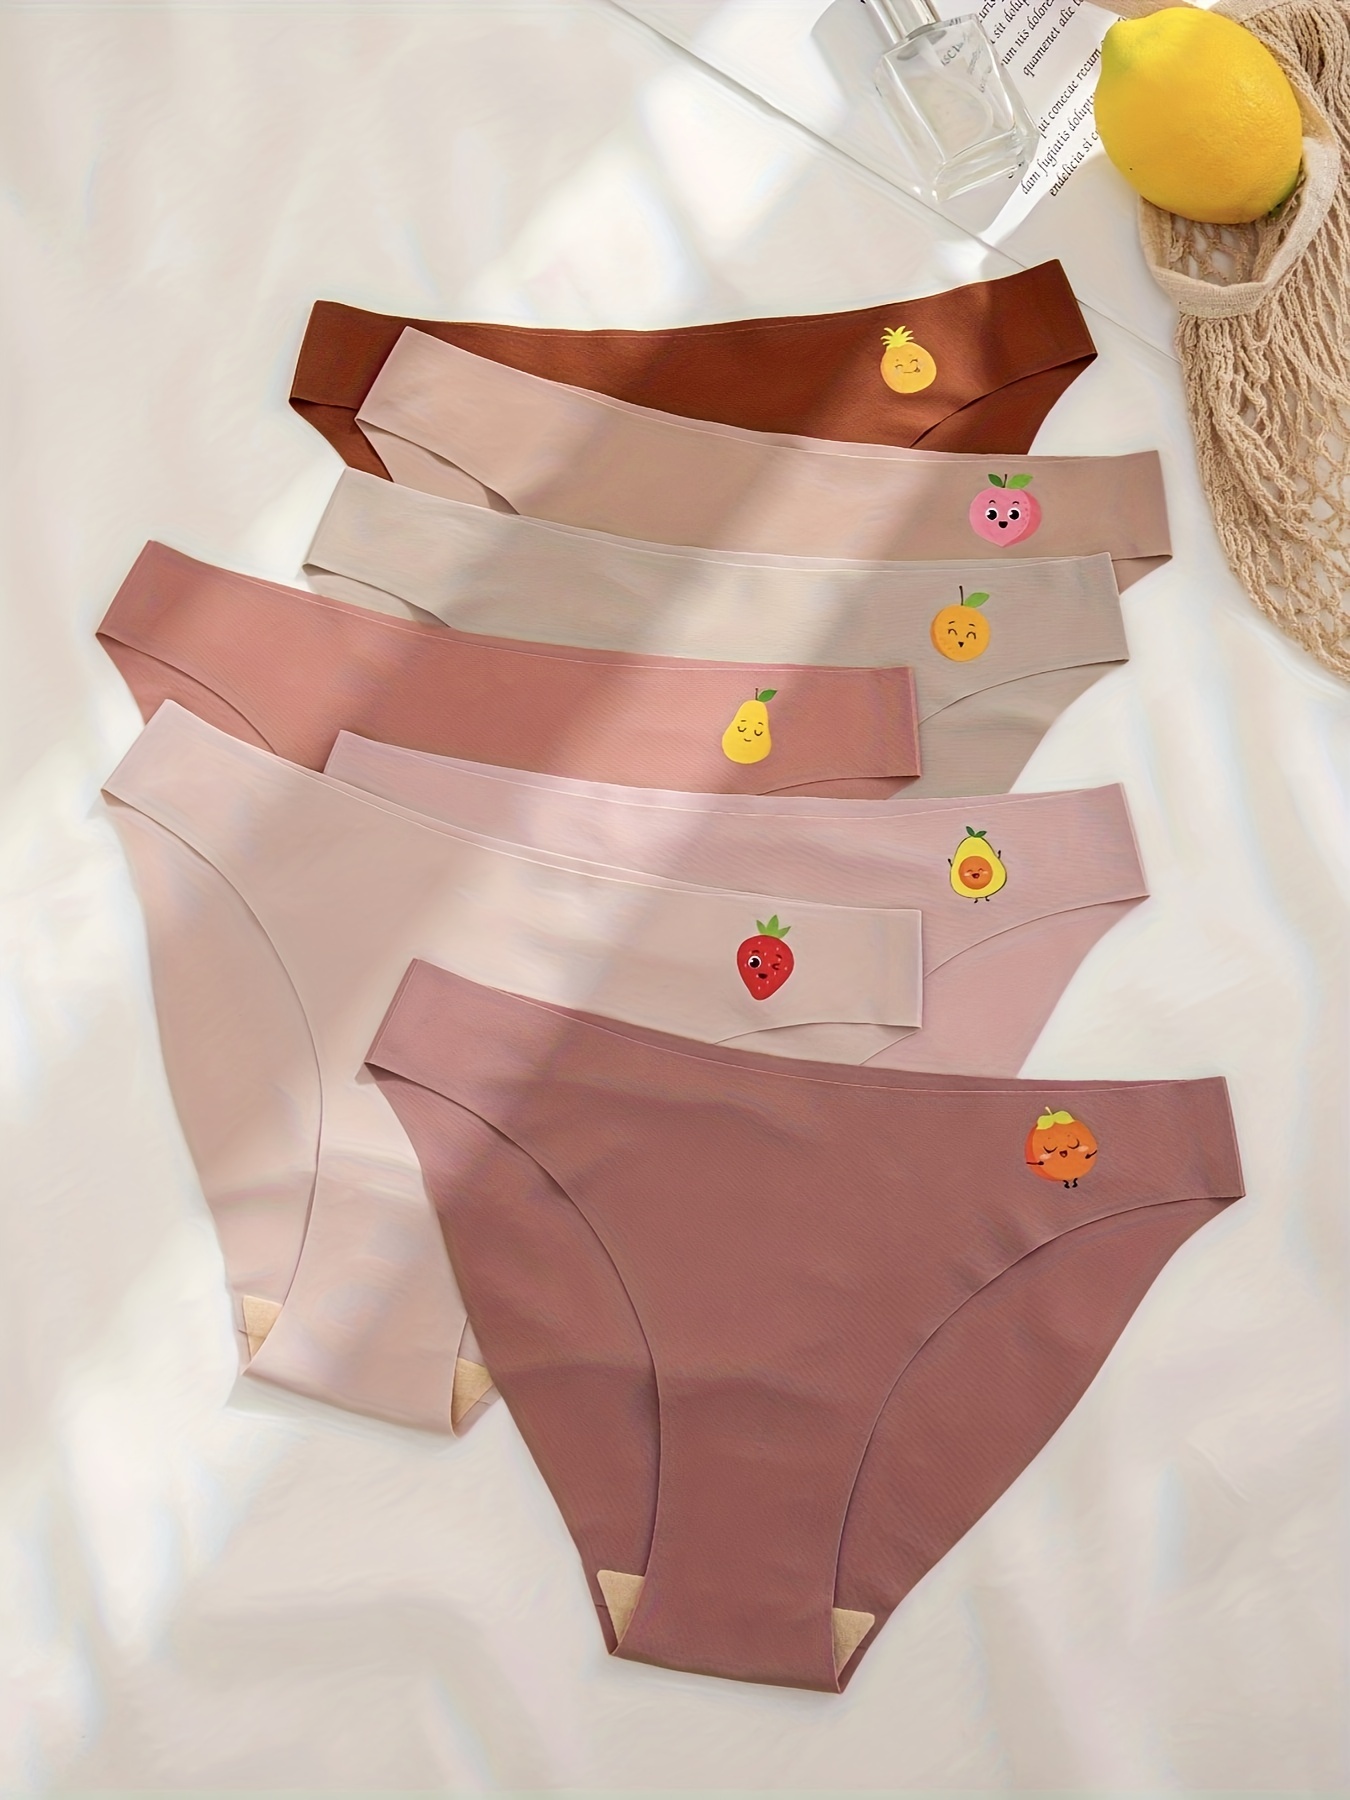 Plus Size 5Pcs/Lot Cotton Panties Girl Briefs Women Underwear Cute Cartoon  Underpants Breathable Shorts Intimates Sexy Lingerie